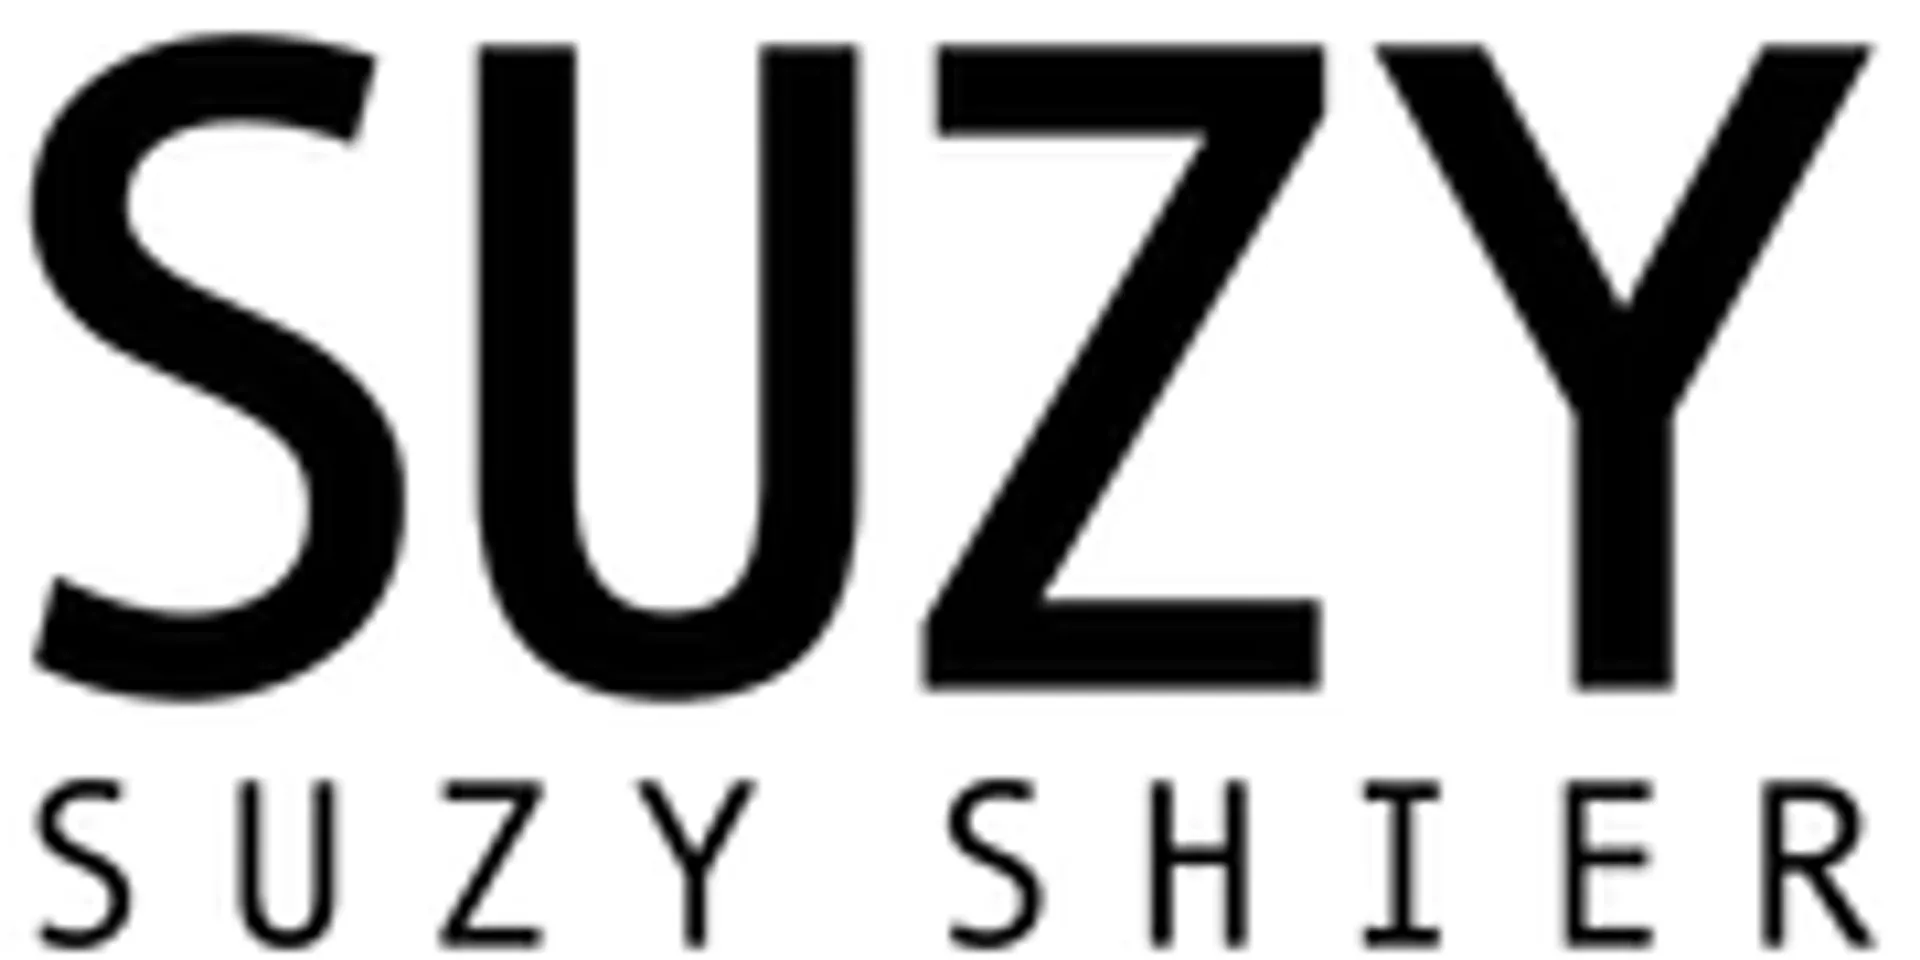 SUZY SHIER logo de circulaires